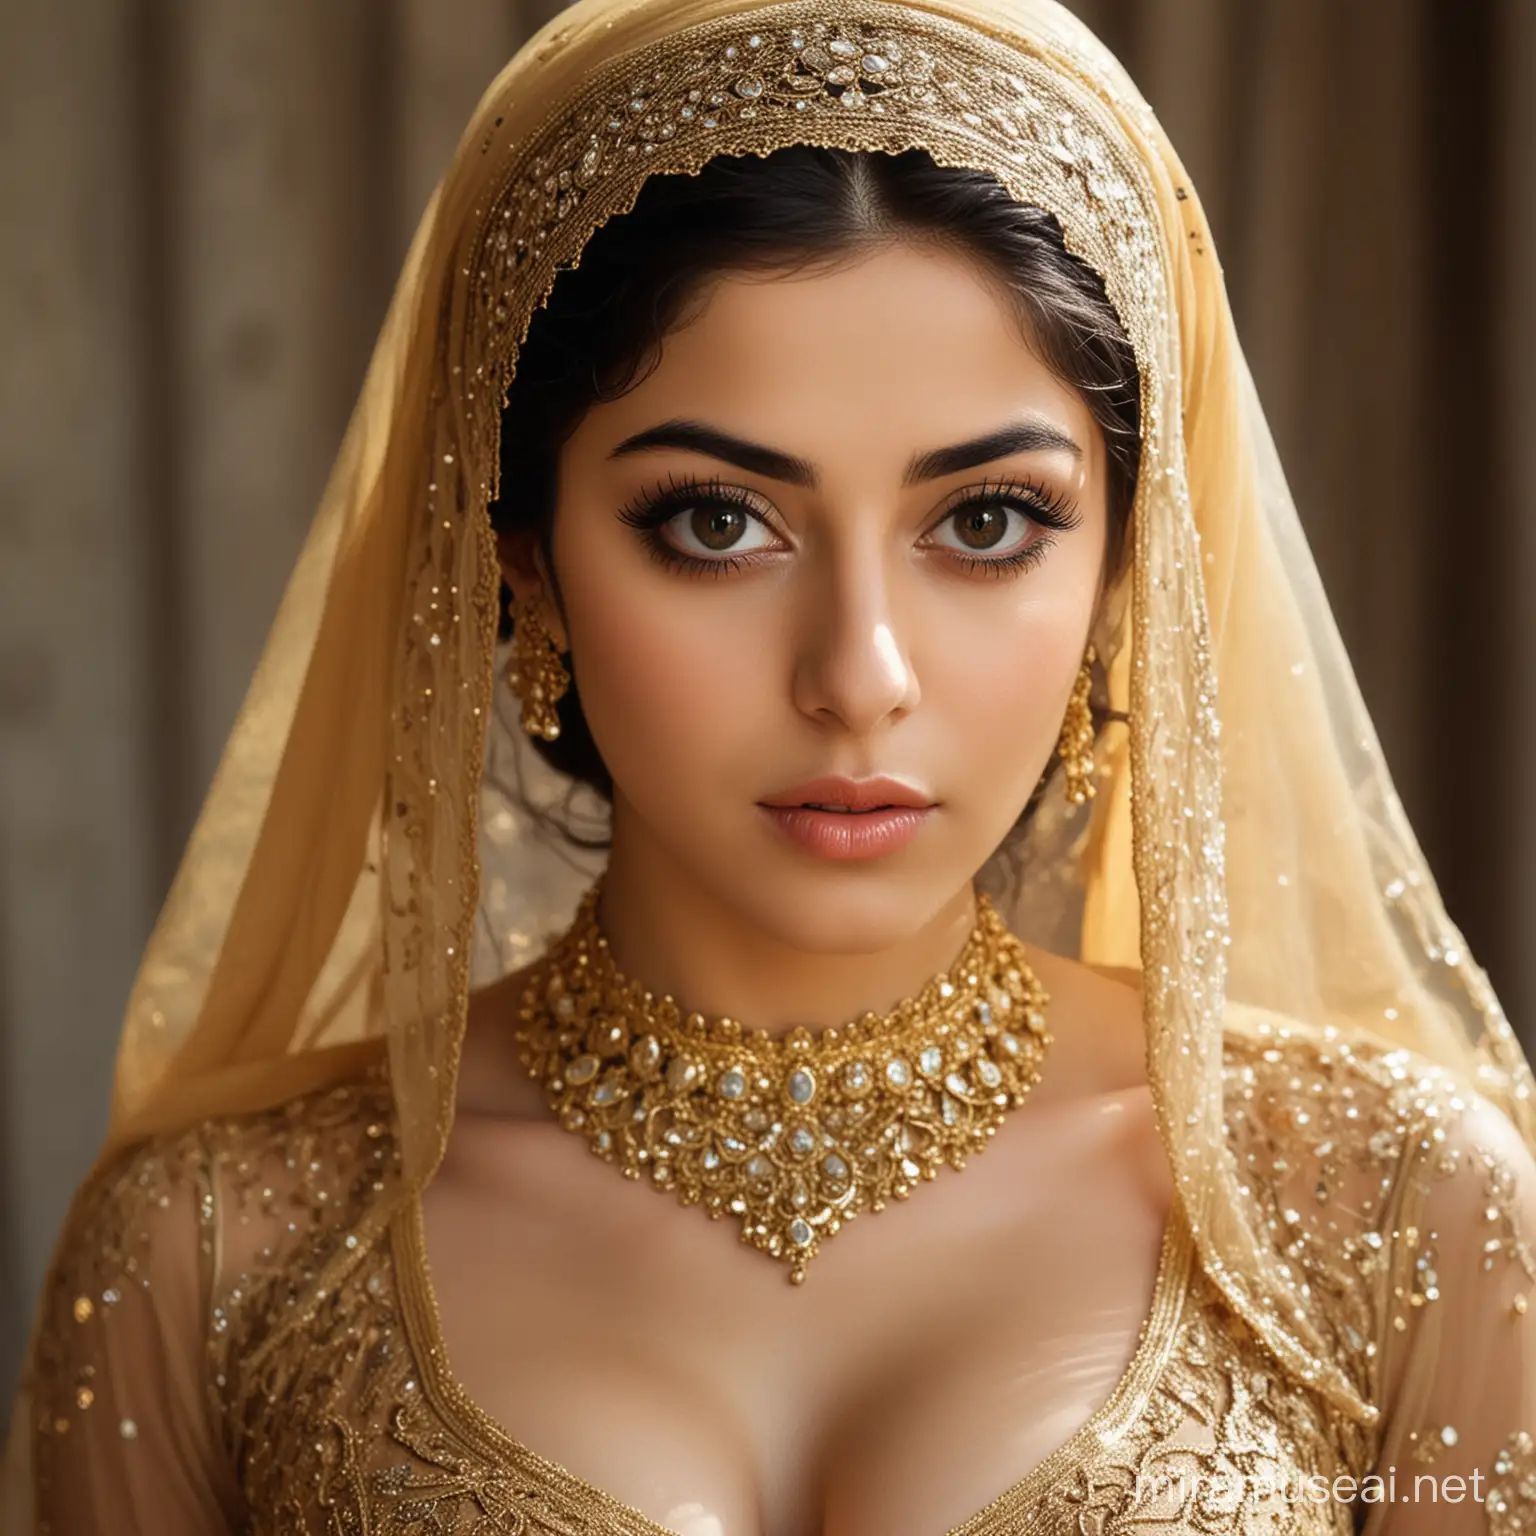 Elegant Iranian Woman in Golden Dress with Graceful Veil